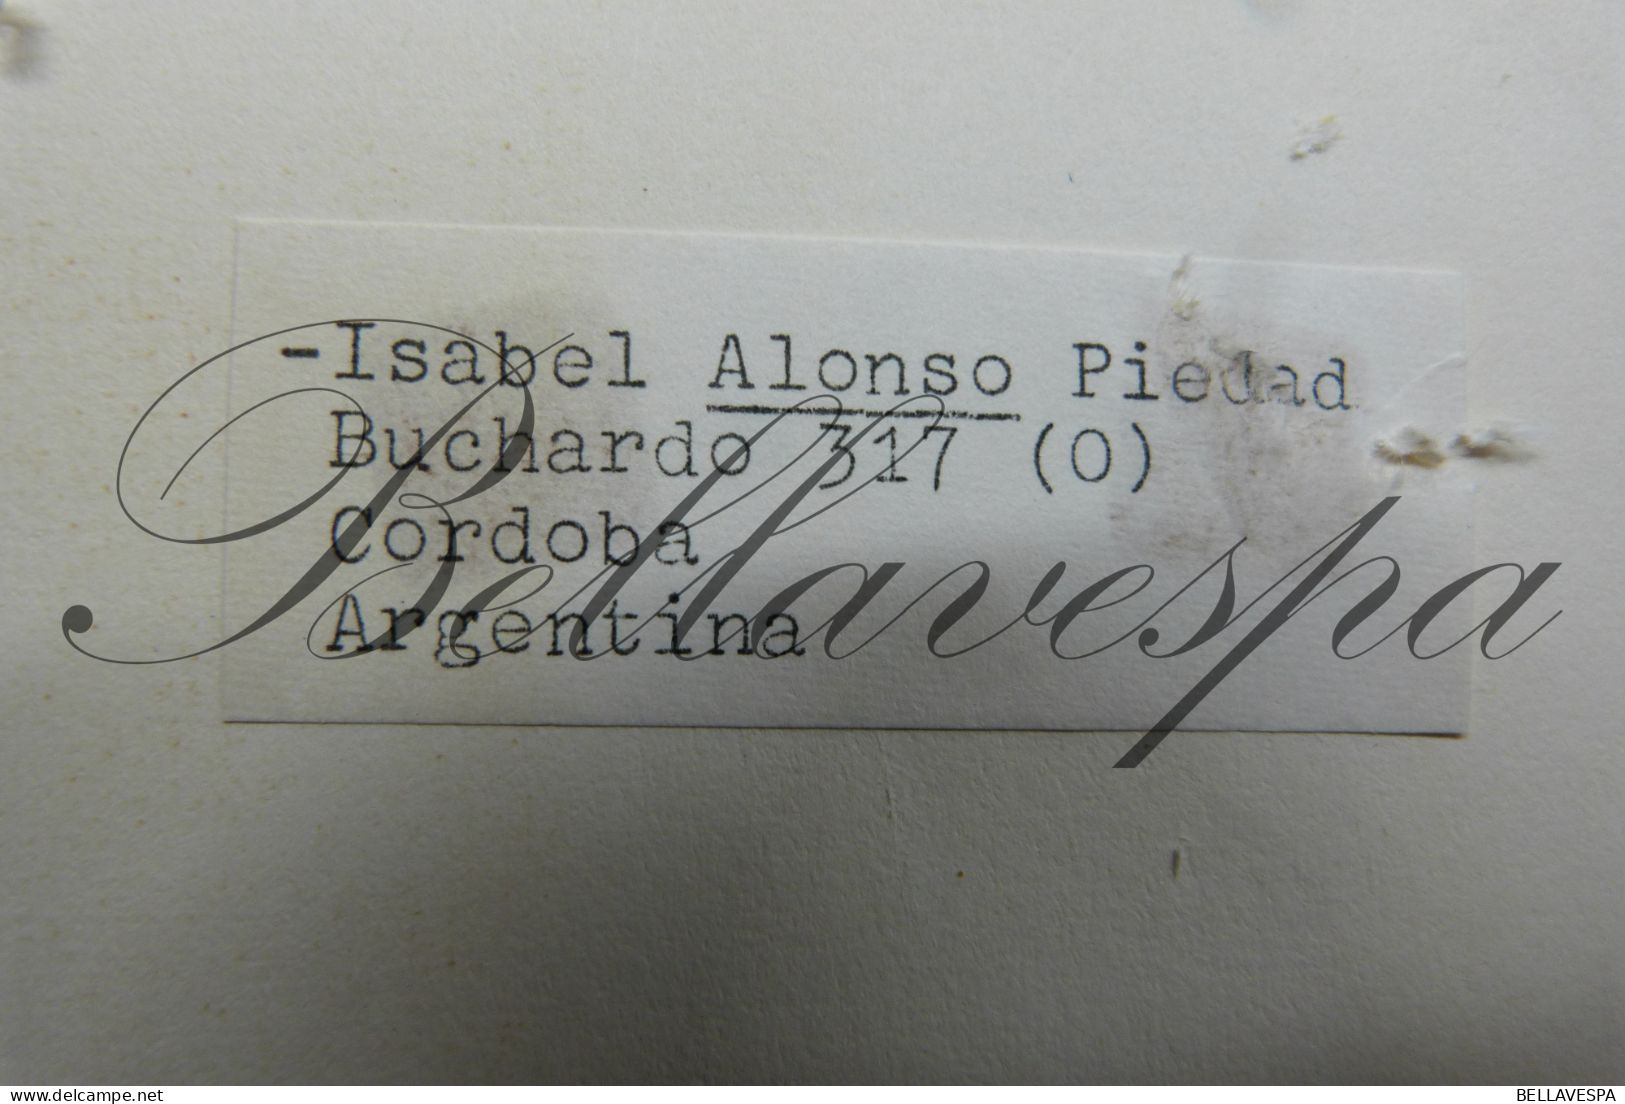 Isabel ALONSO PIEDAD Cordoba Argentina Buchardo 317.Healt Development Research Amst. Leiden Antw 1971-72 - Genealogie